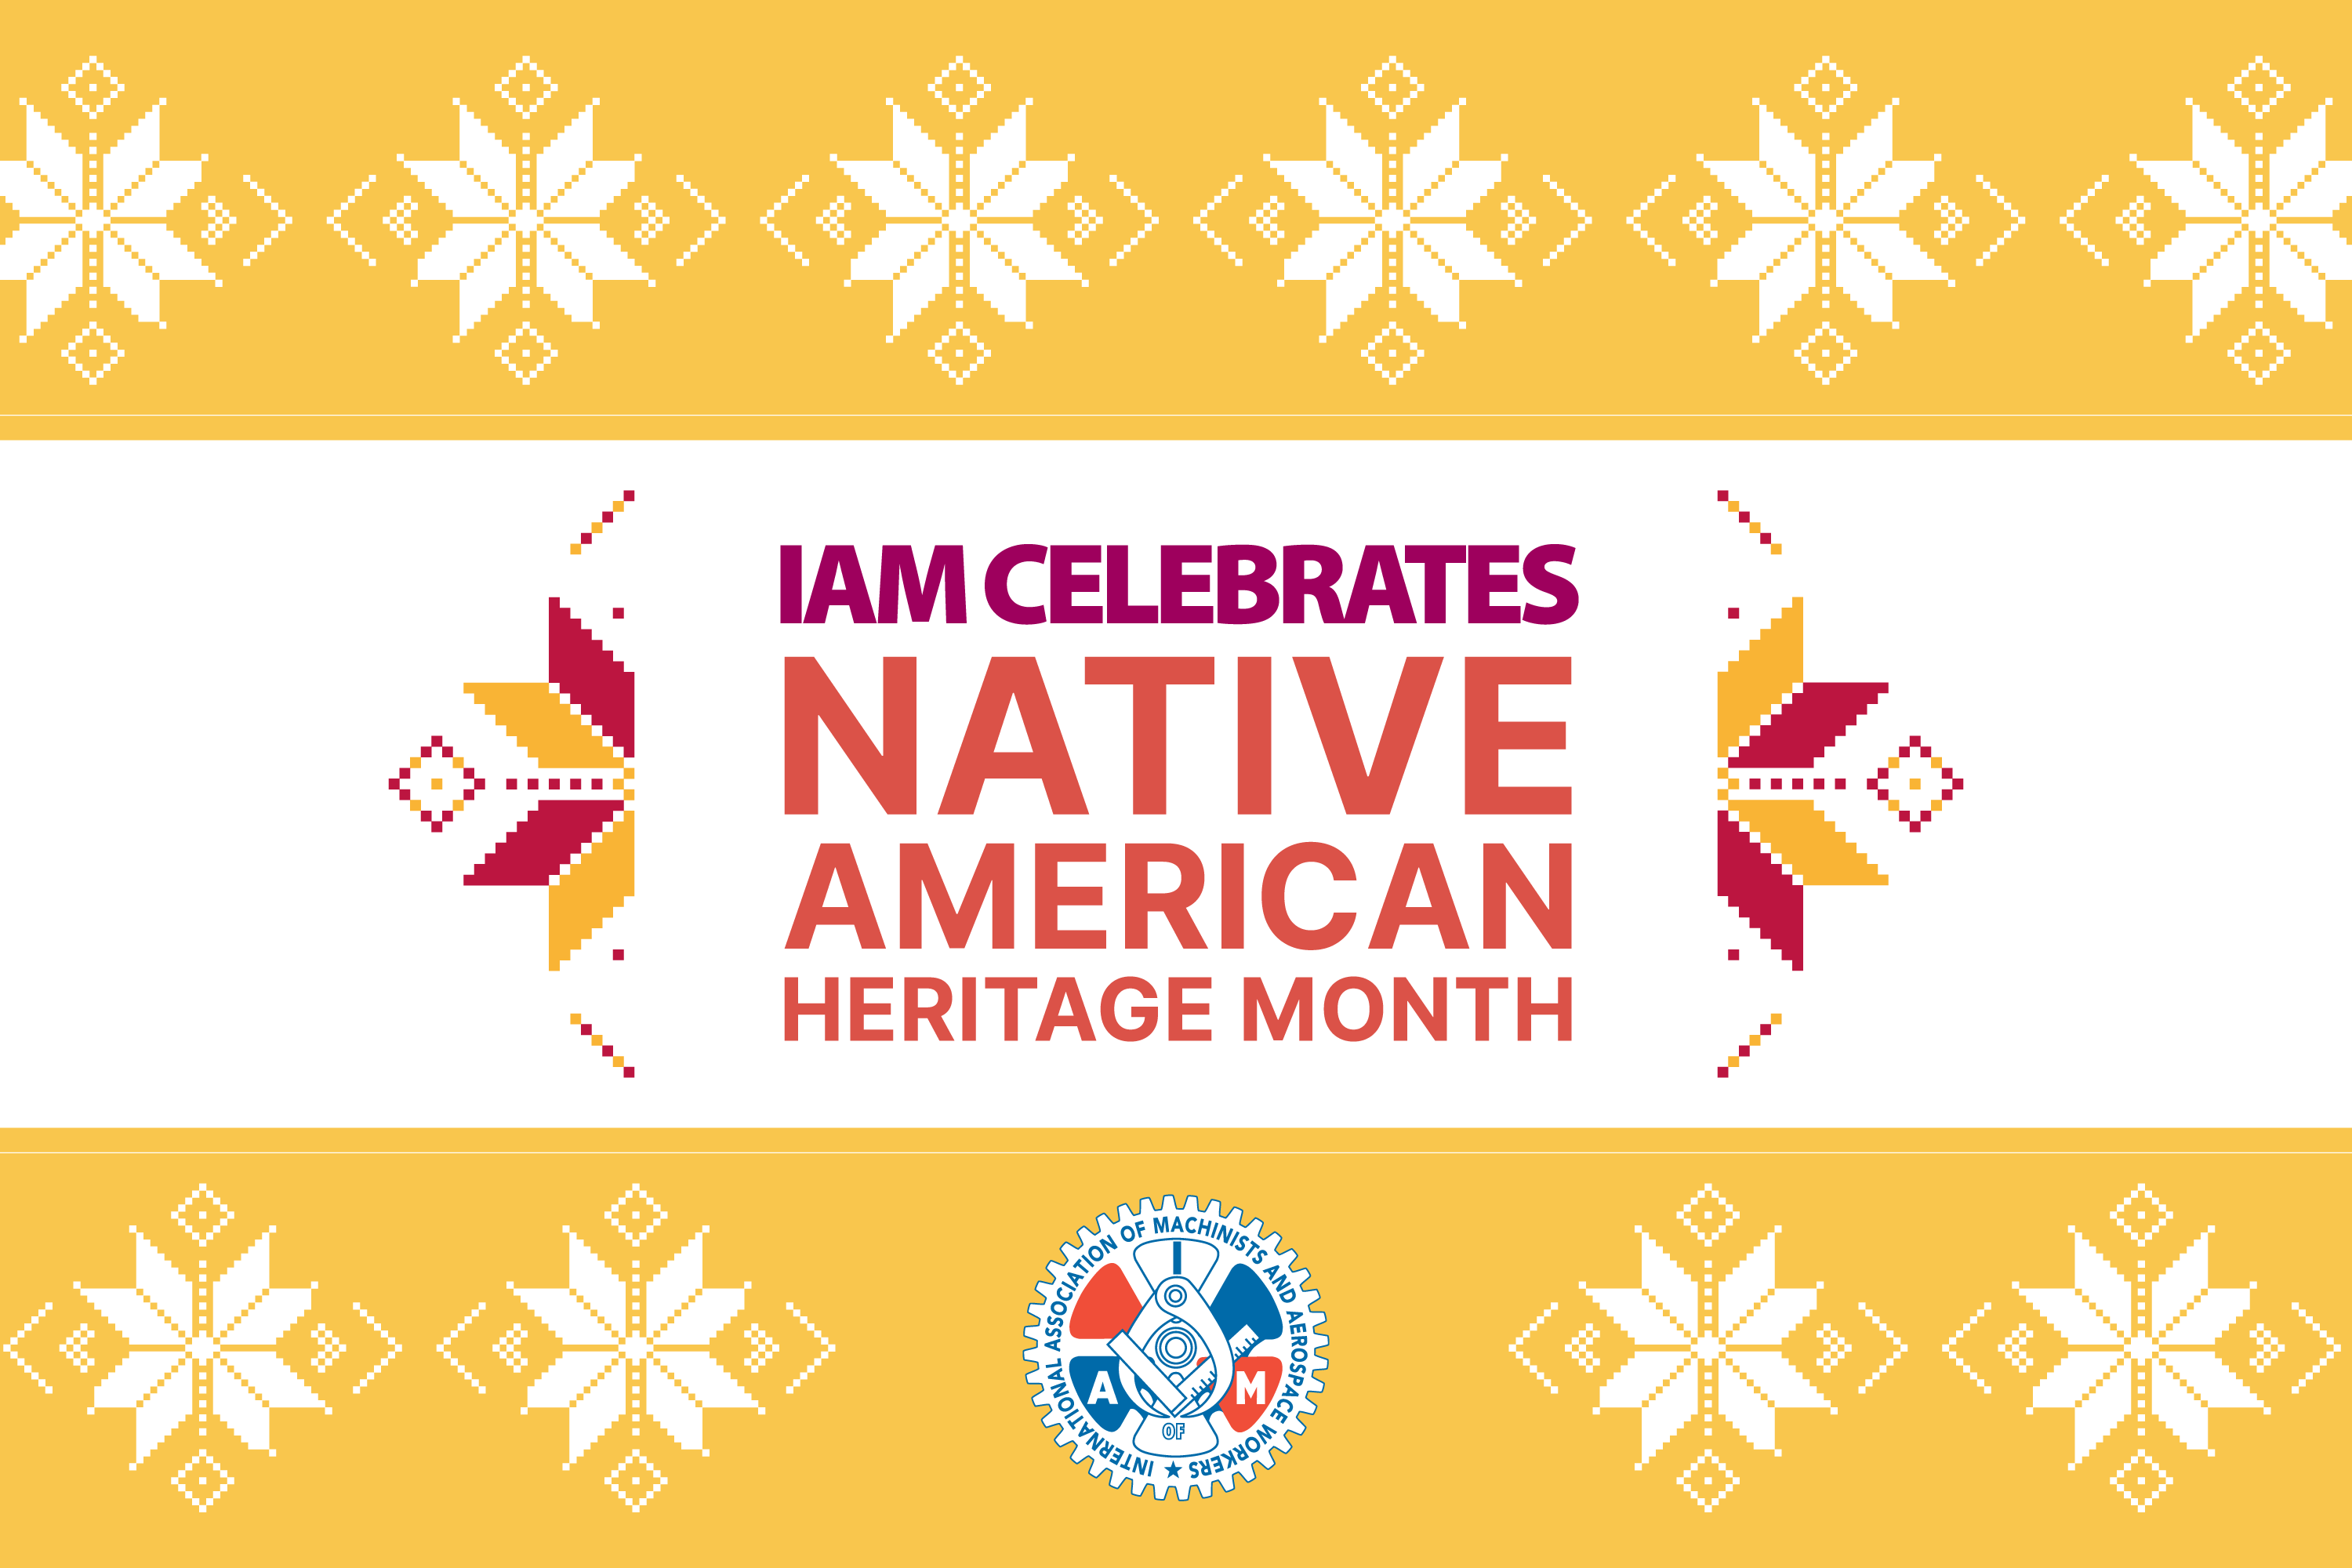 Machinists Union Celebrates Native American Heritage Month